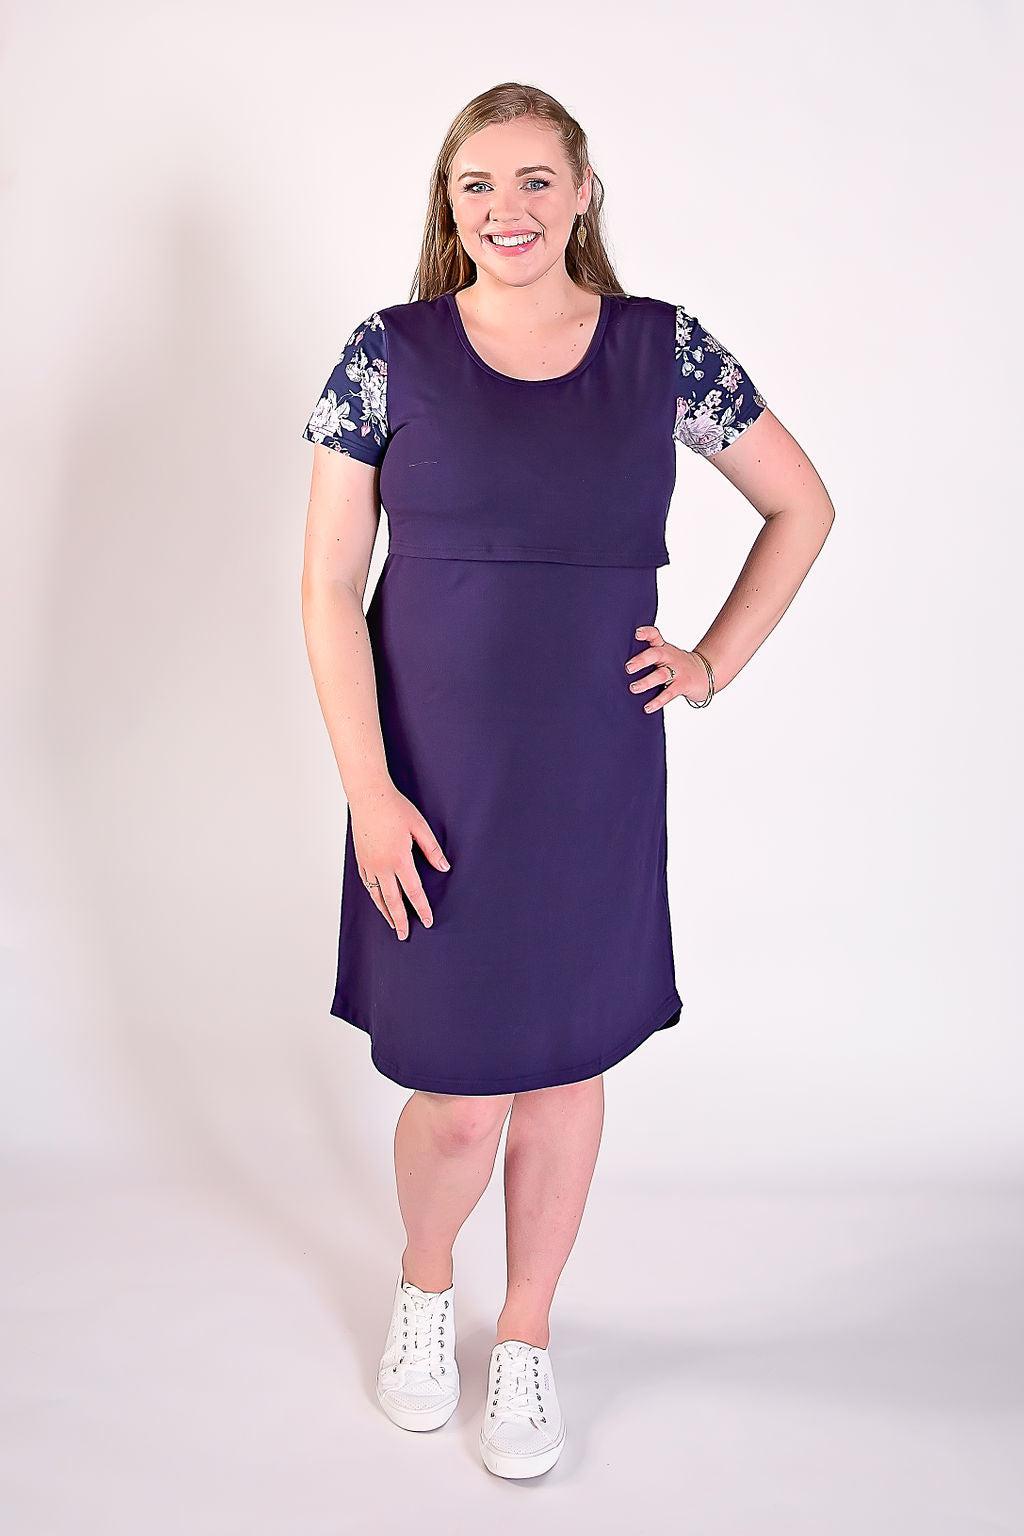 Peach Bloom Floral Sleeve Dress in Navy - Flap-Flourish Maternity Breastfeeding Dresses NZ Maternity Dresses NZ